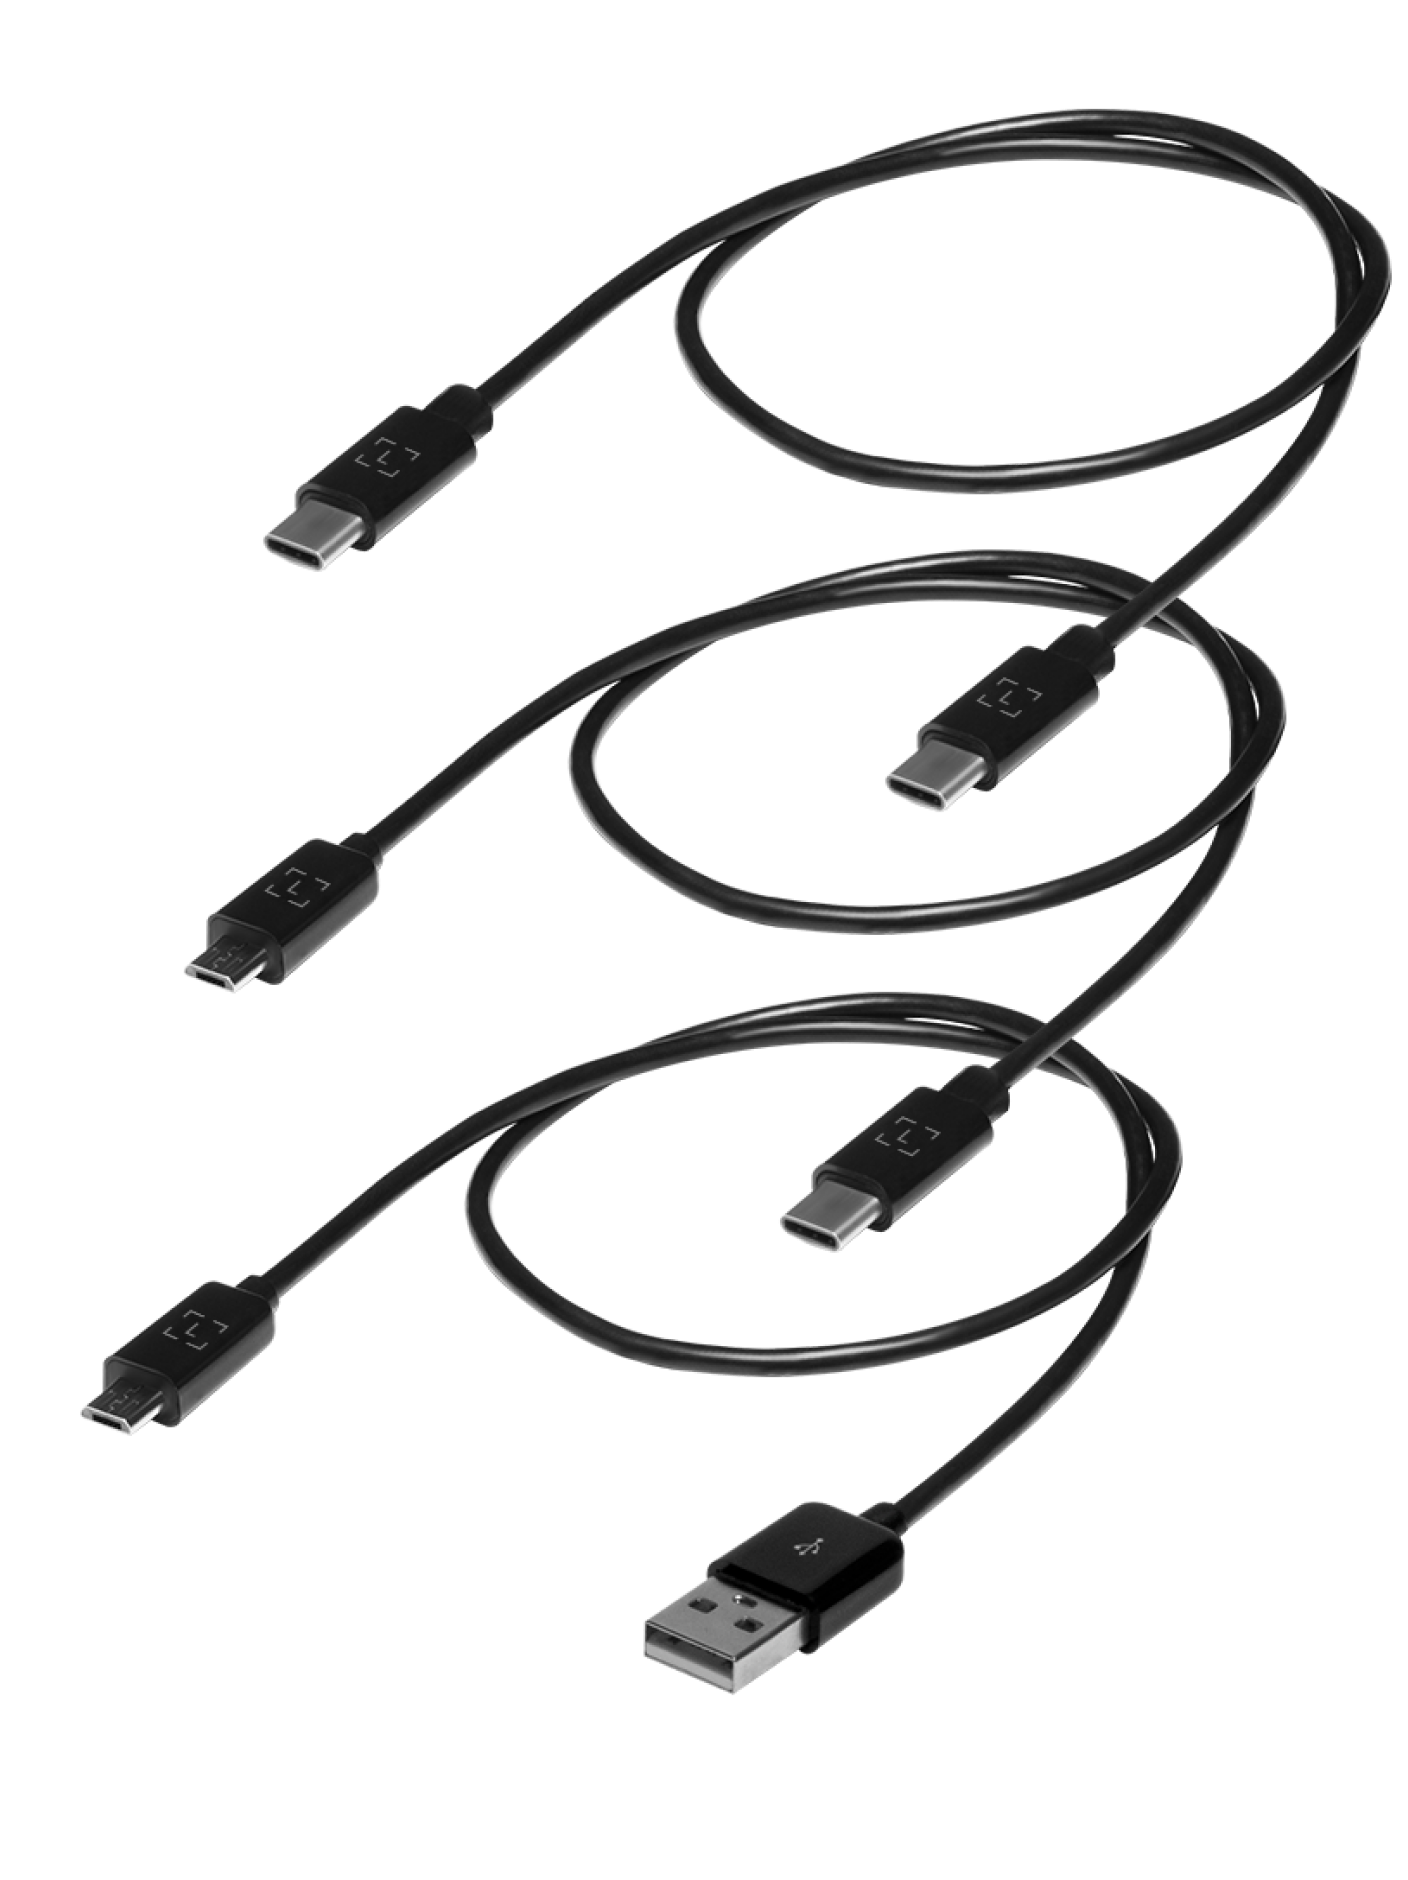 3 Port Micro USB OTC 3 in 1 Micro USB to USB OTG Hub Cable Cord